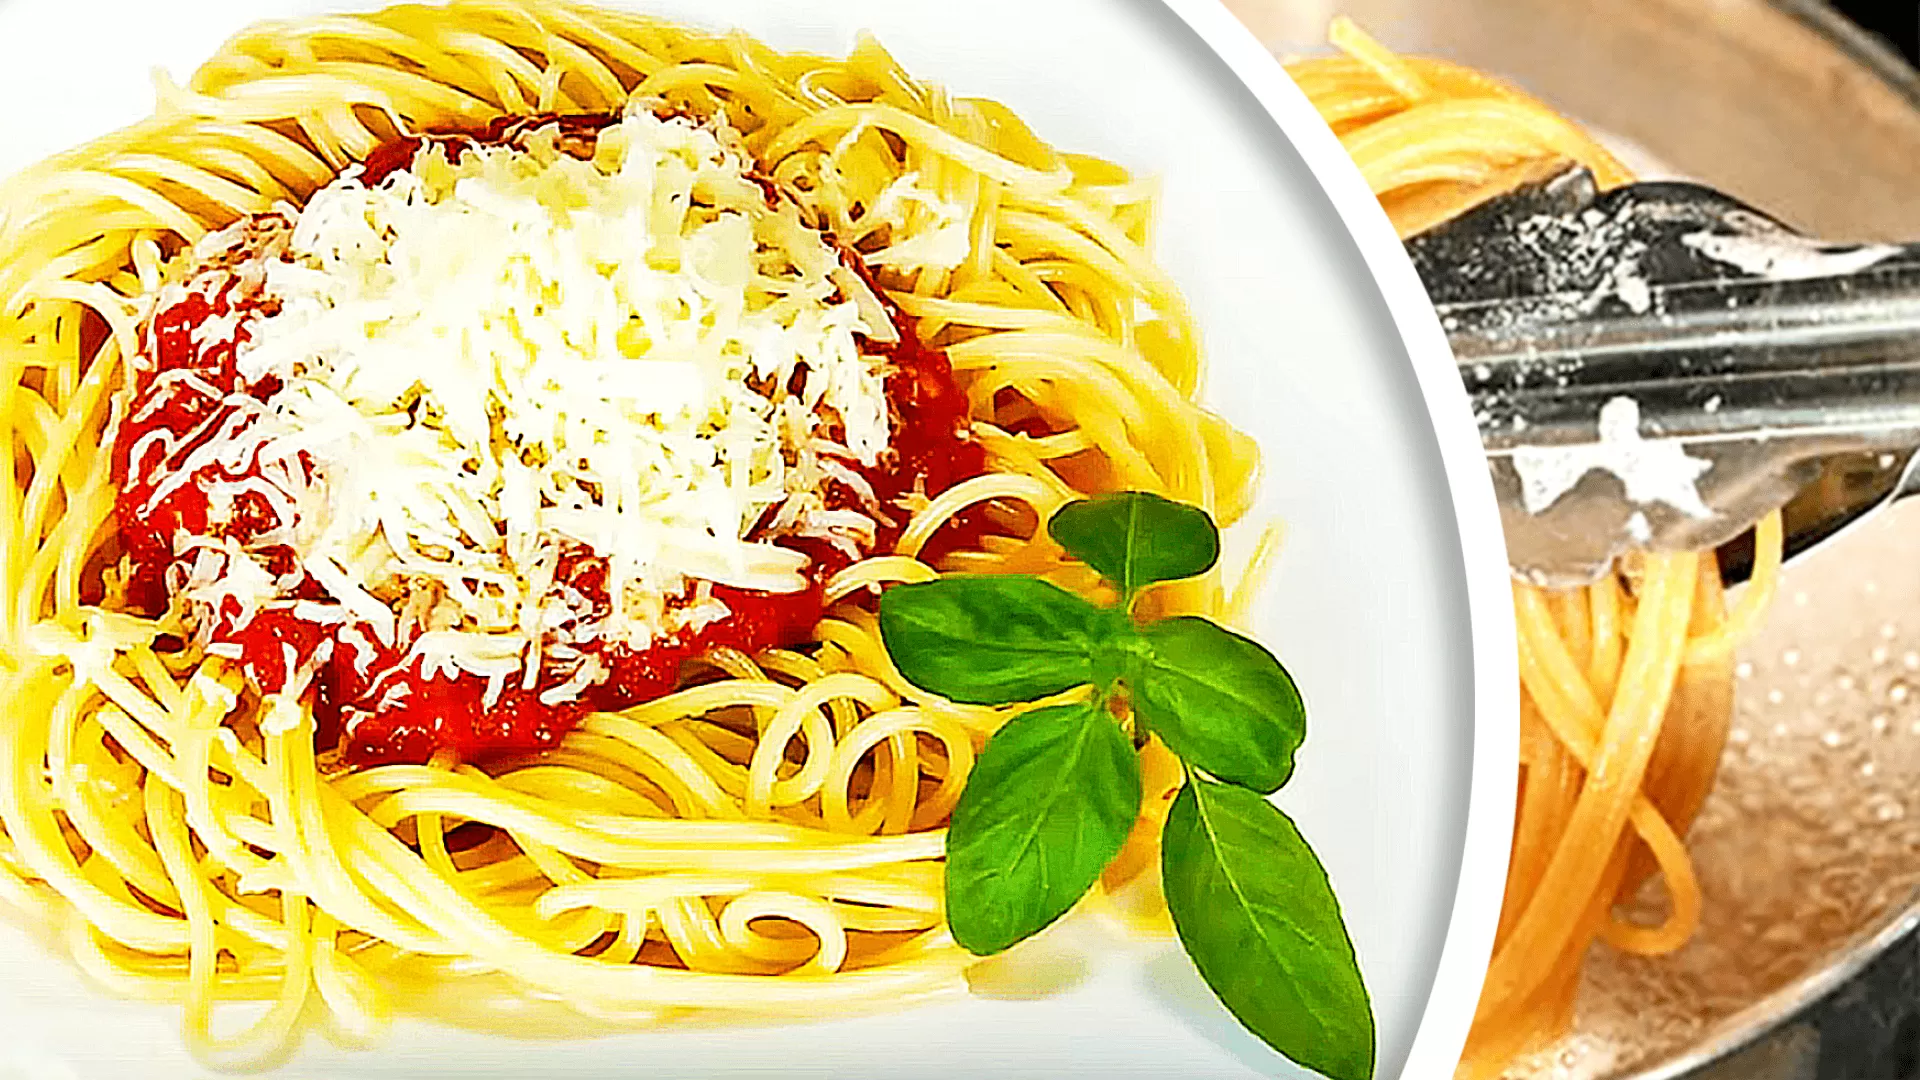 Homemade Spaghetti Sauce with Tomato Juice 4.6 (9)